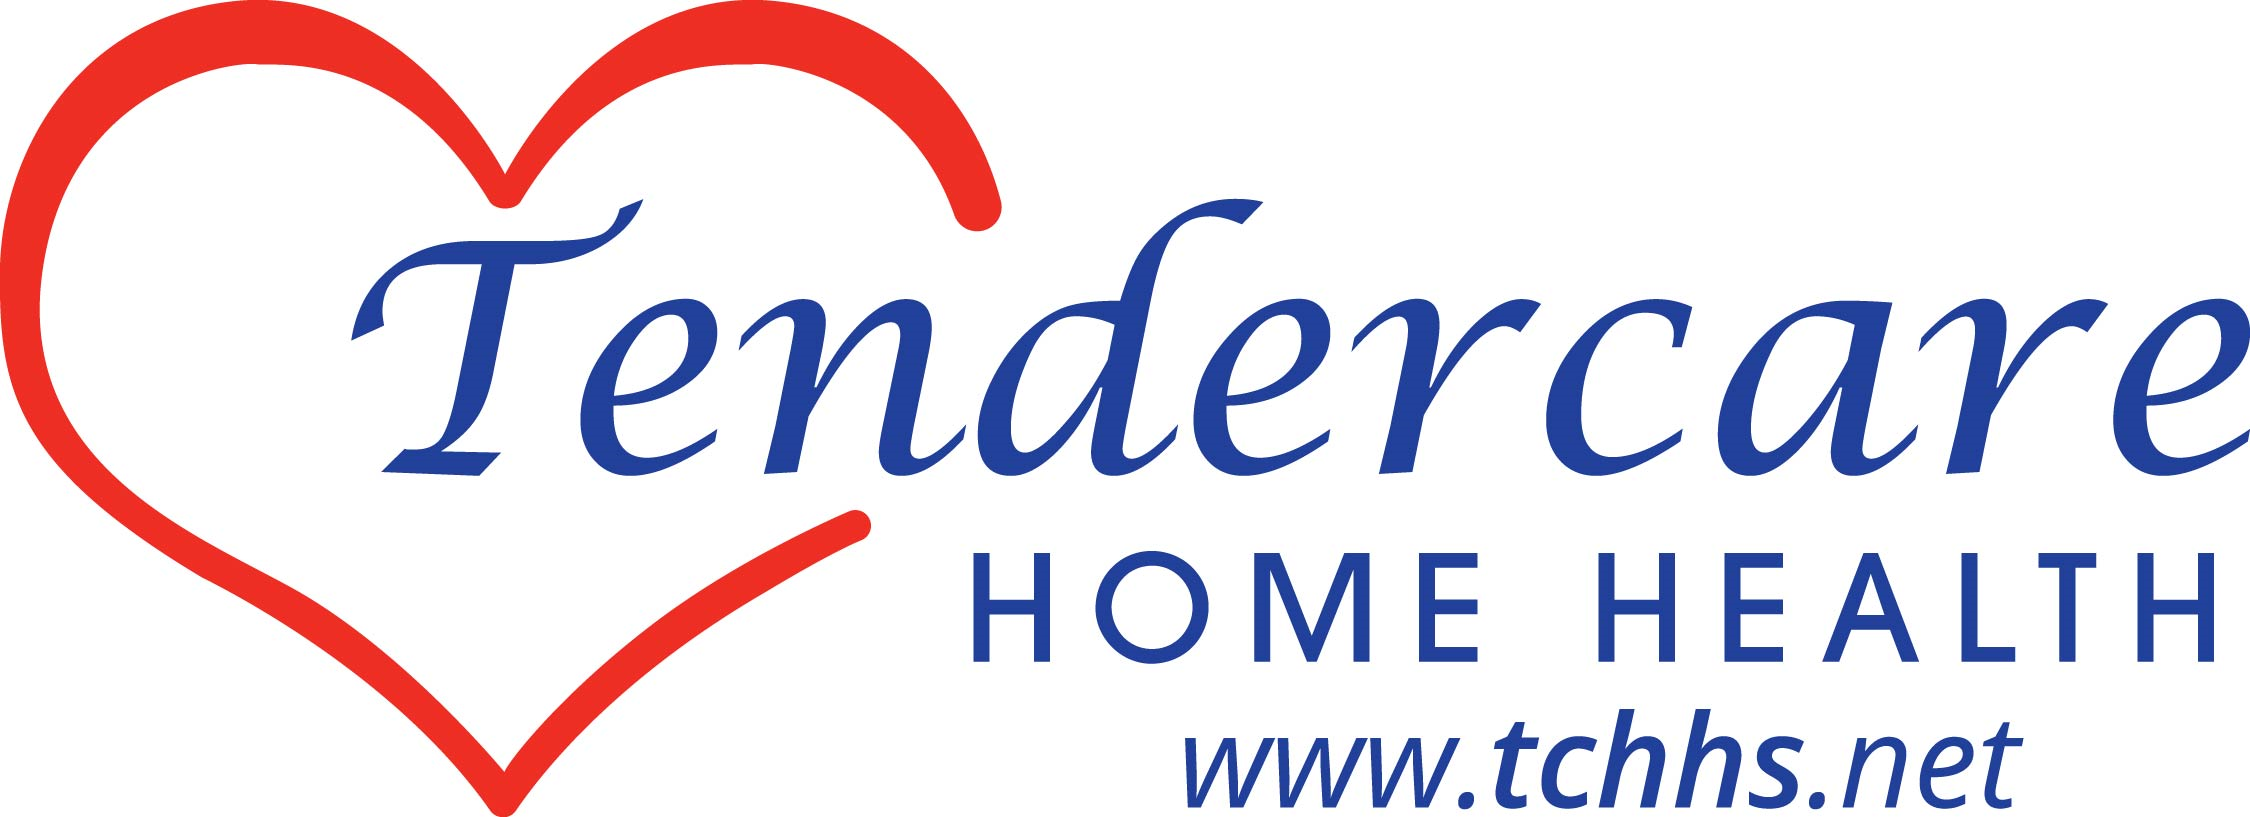 Tendercare Home Health Service, Inc. logo